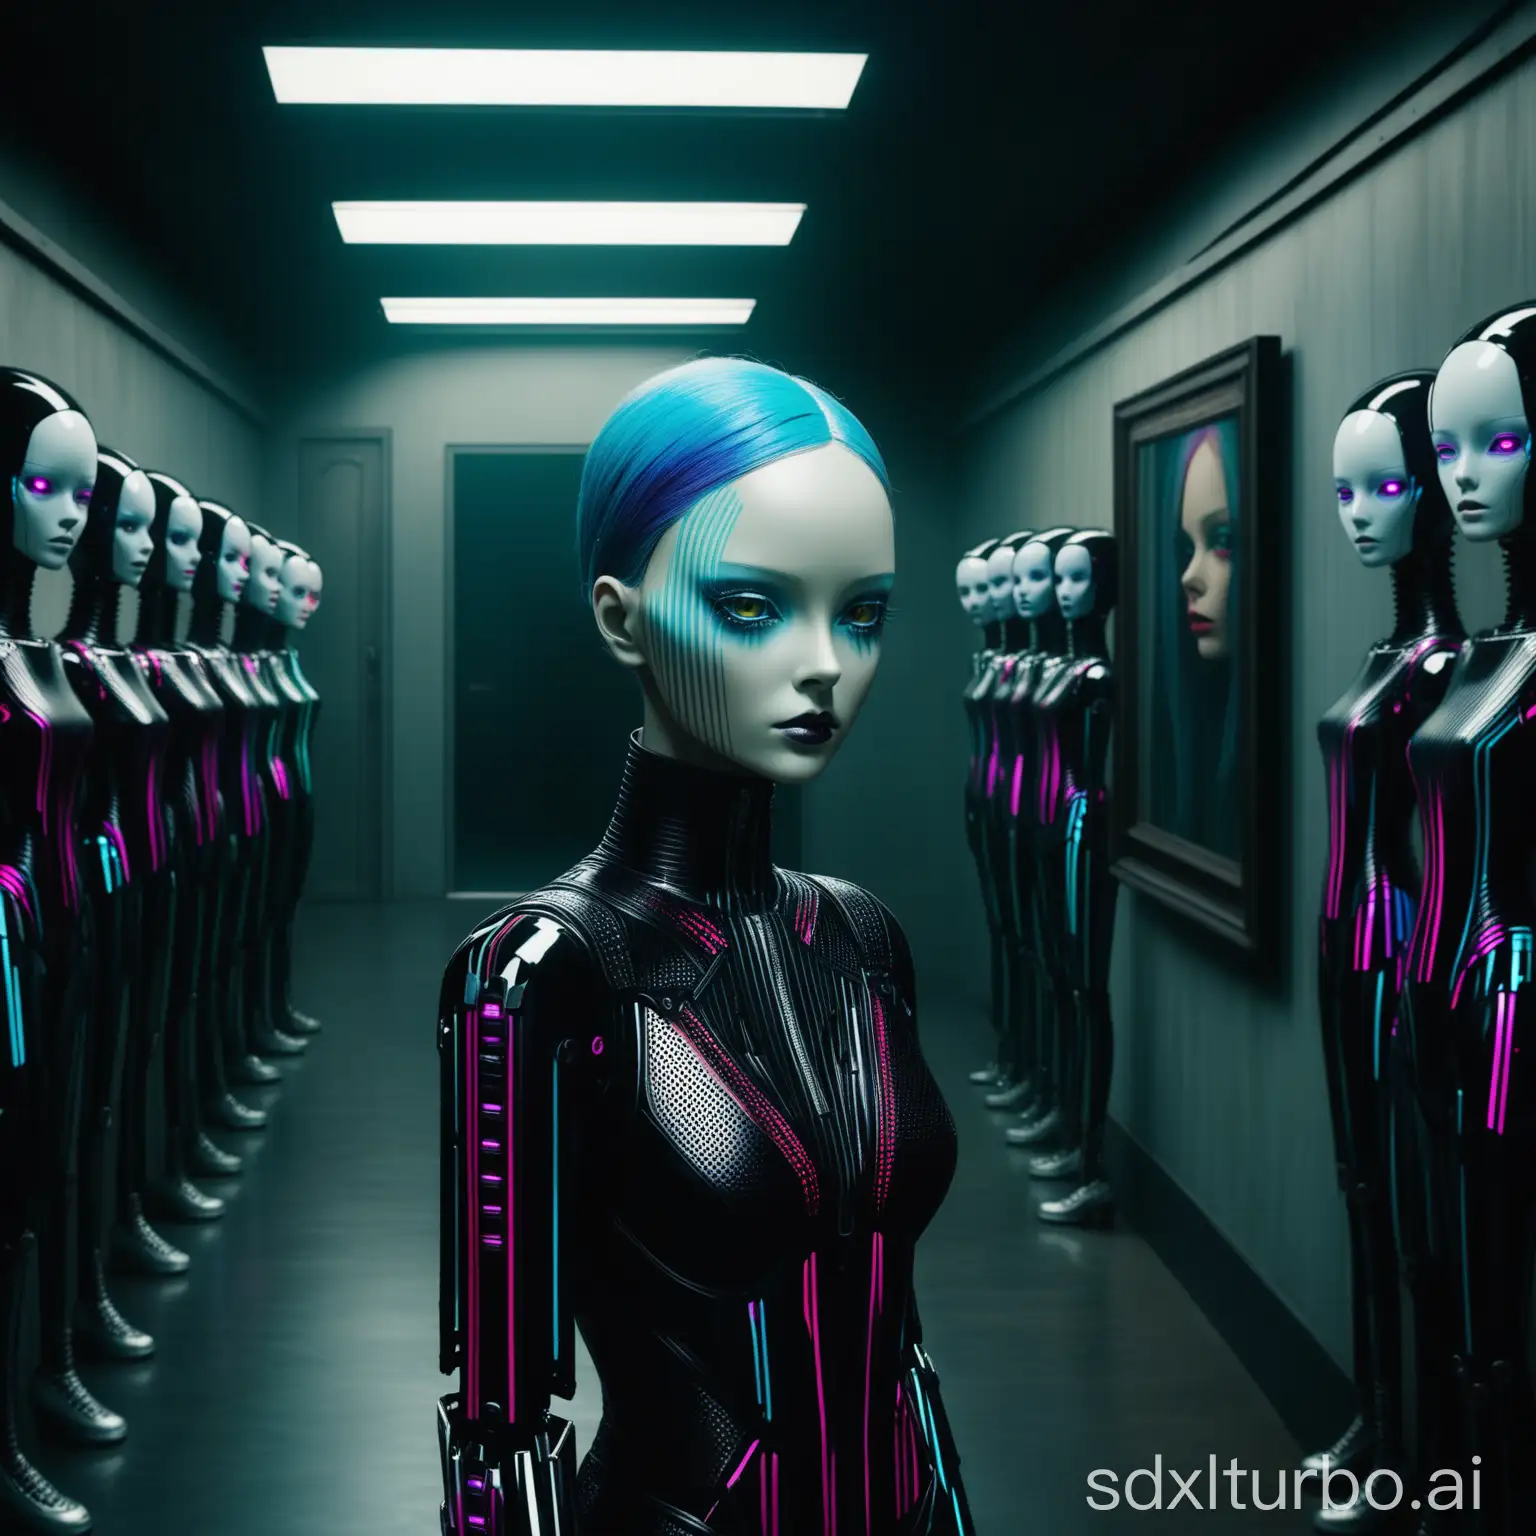 PunkNoir-Doll-Cyborgs-in-Vivid-Colors-Intense-Horror-Film-Scene